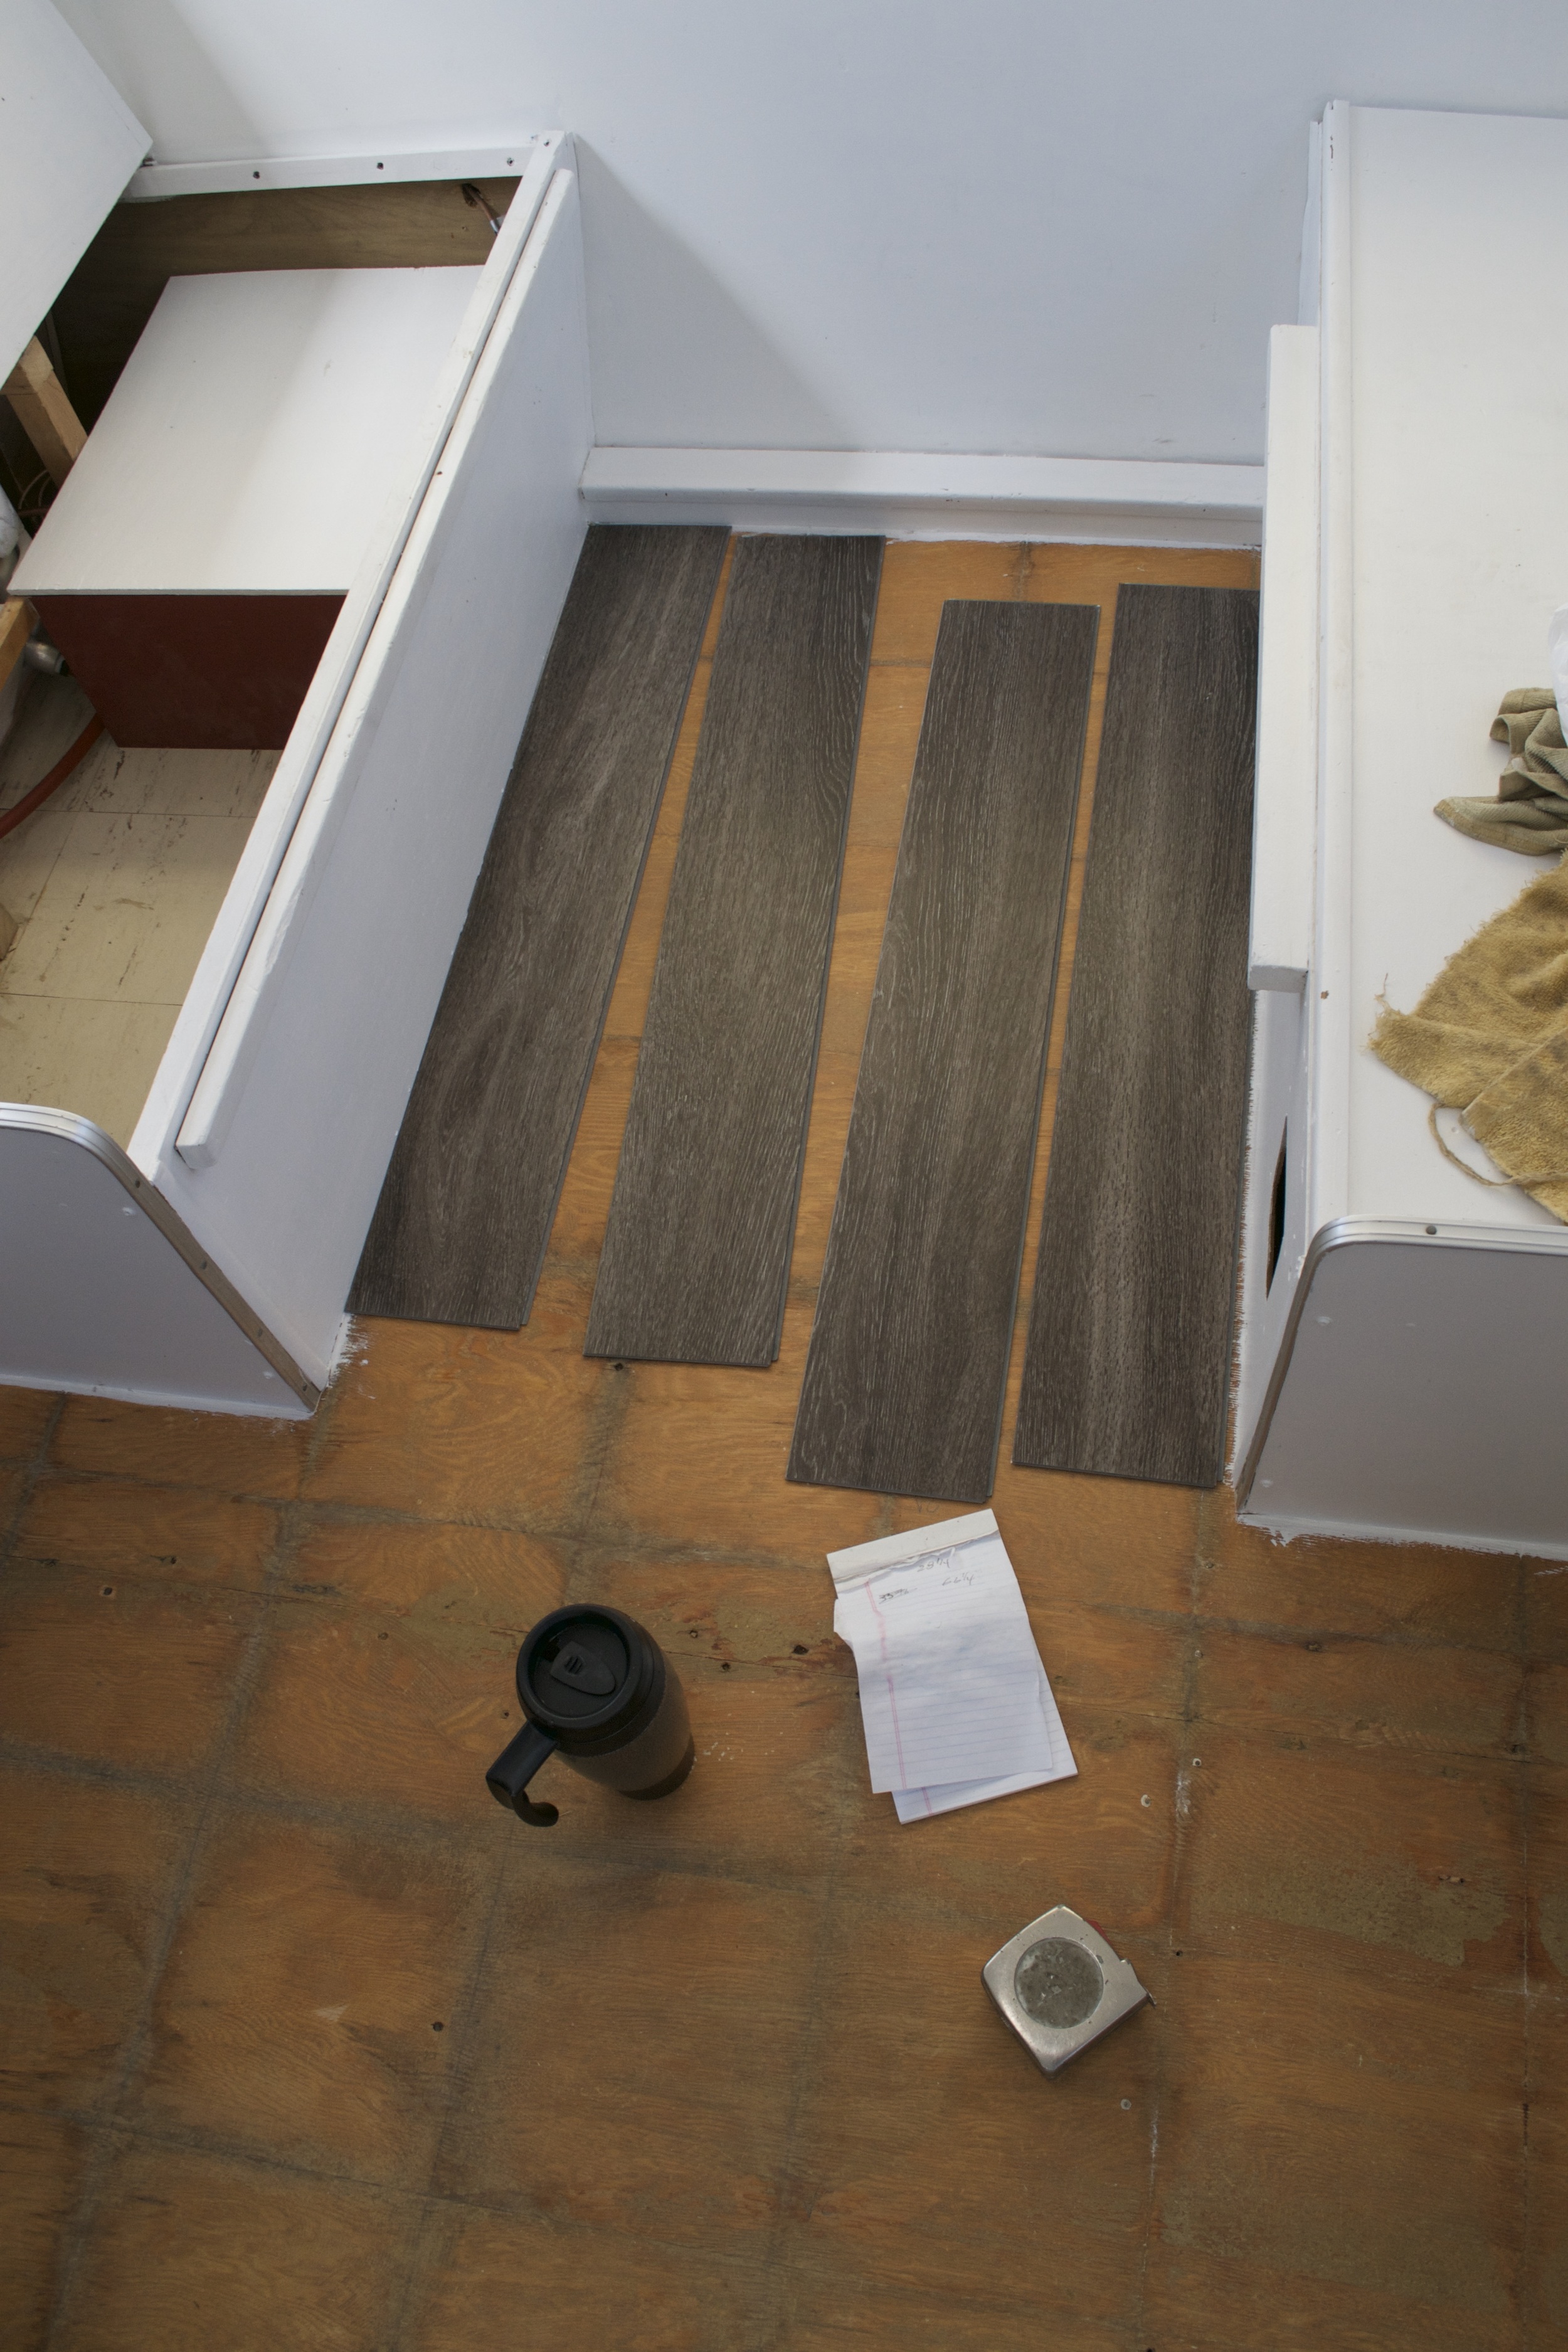 Reasons To Install Vinyl Plank Flooring, How To Put Laminate Flooring In Rv